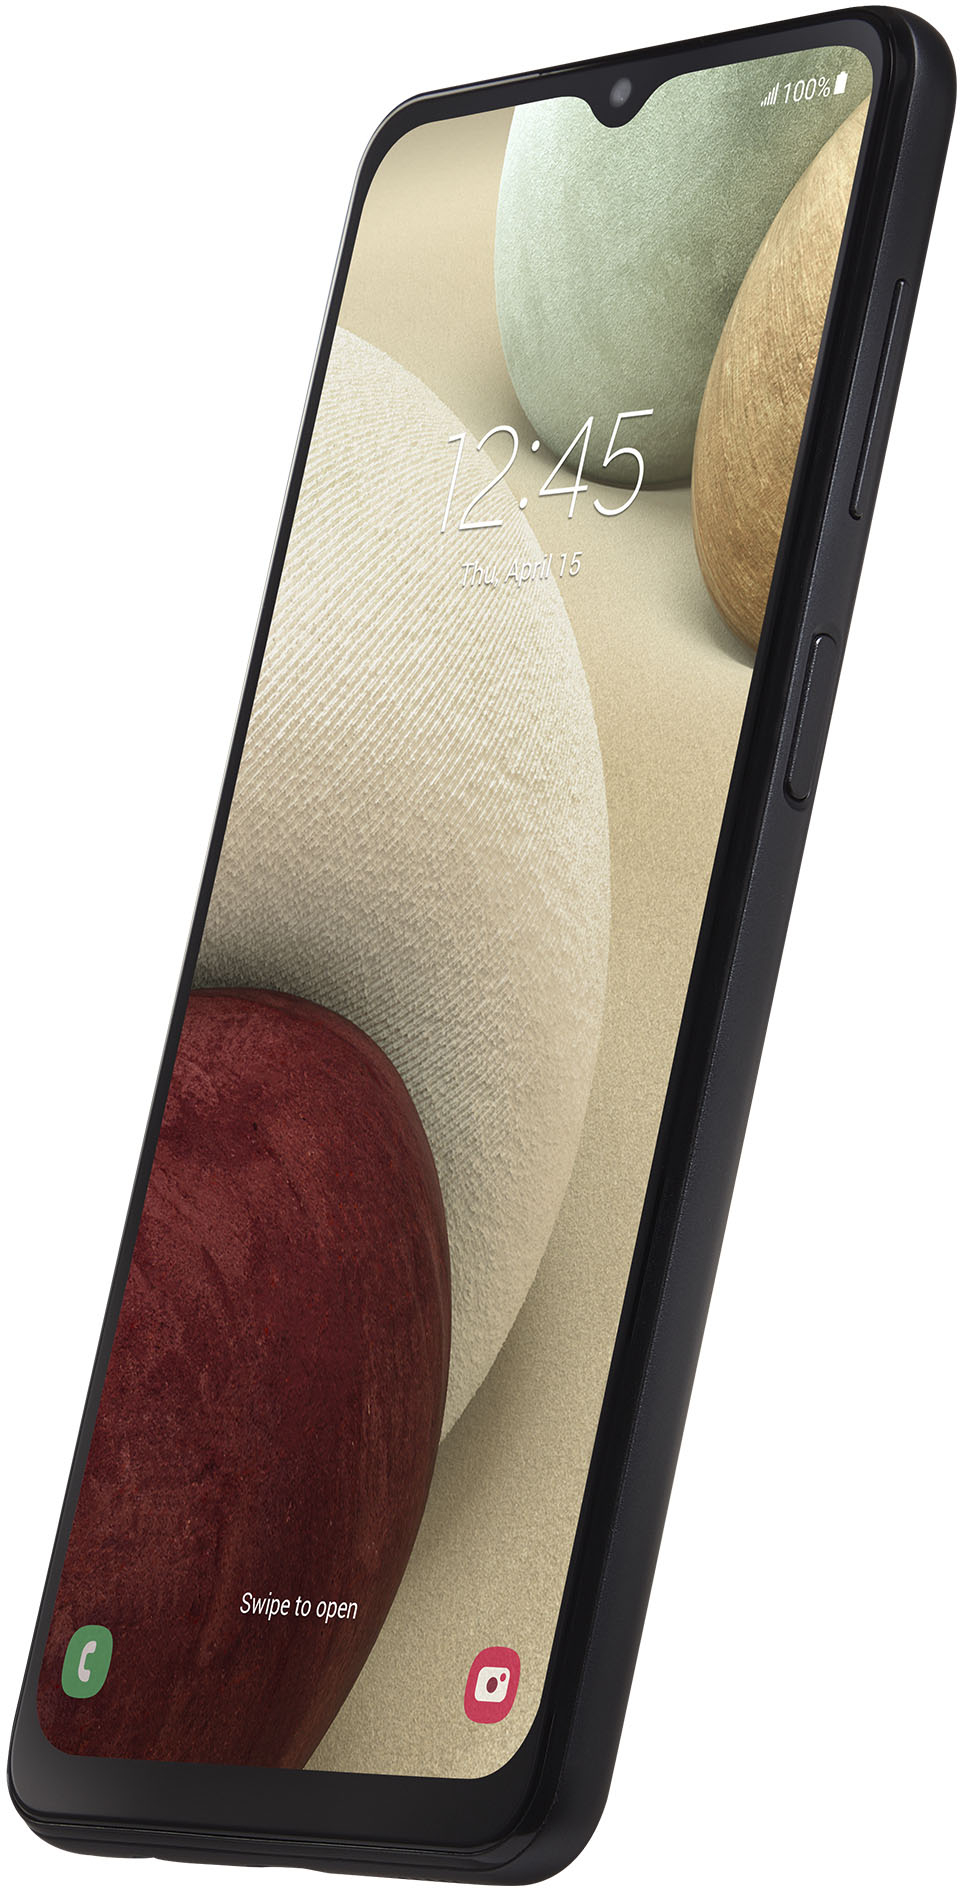 Samsung Galaxy A12 Review: Cheap can be fun - PhoneArena